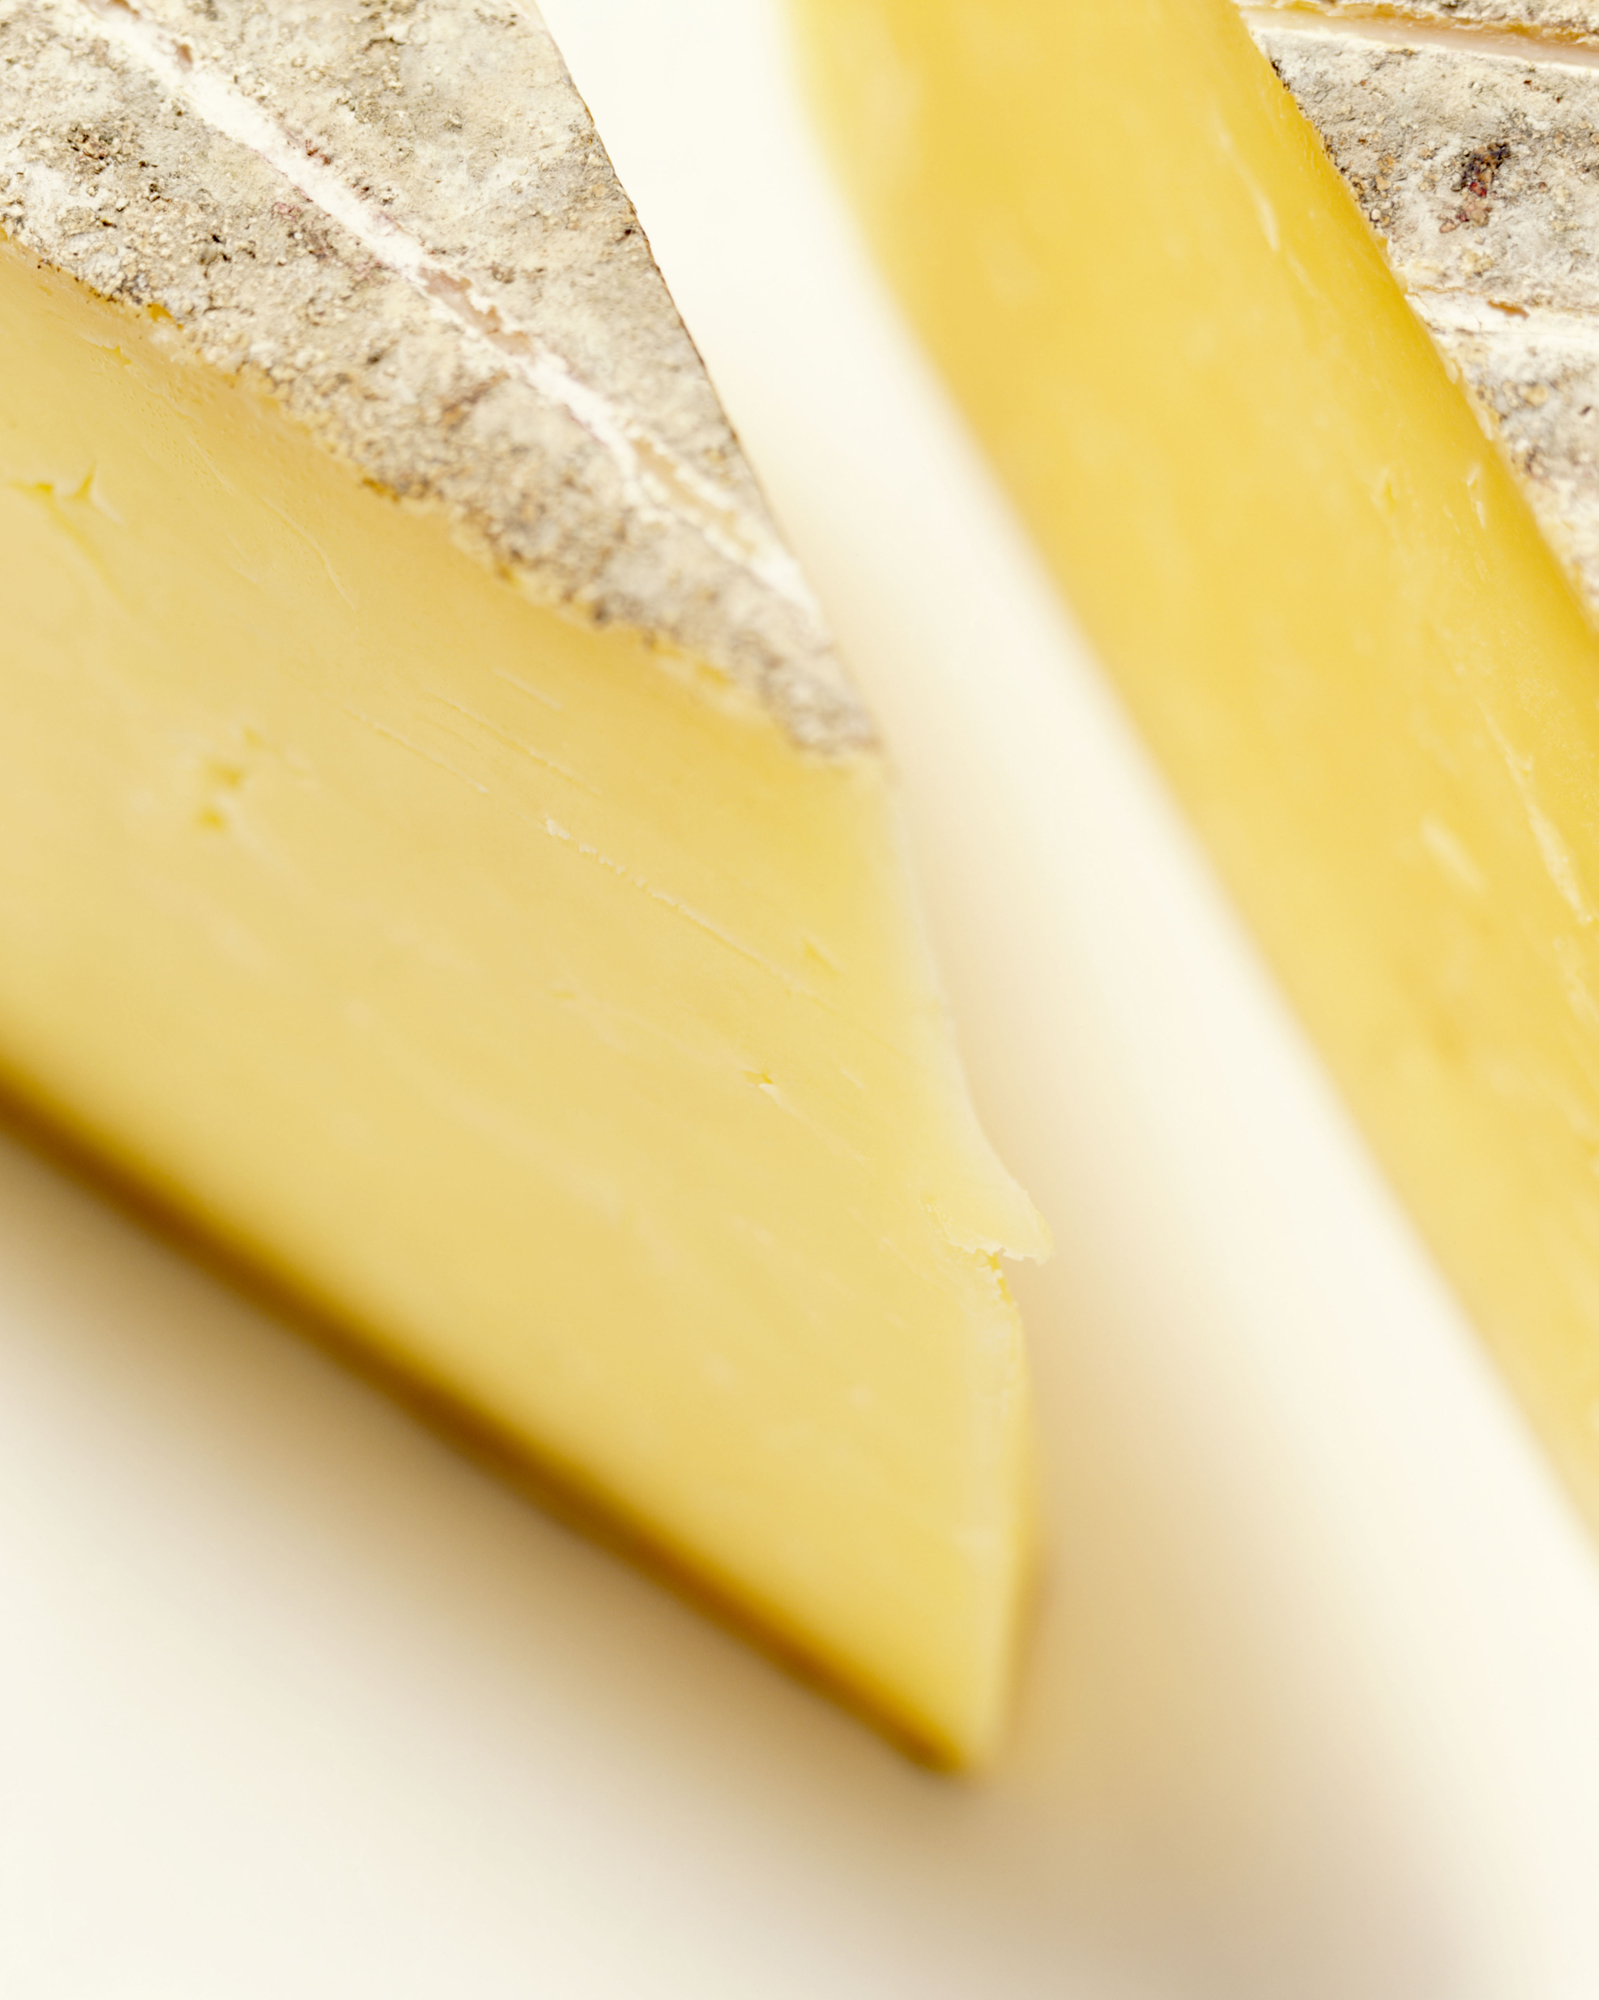 Cantal cheese slice